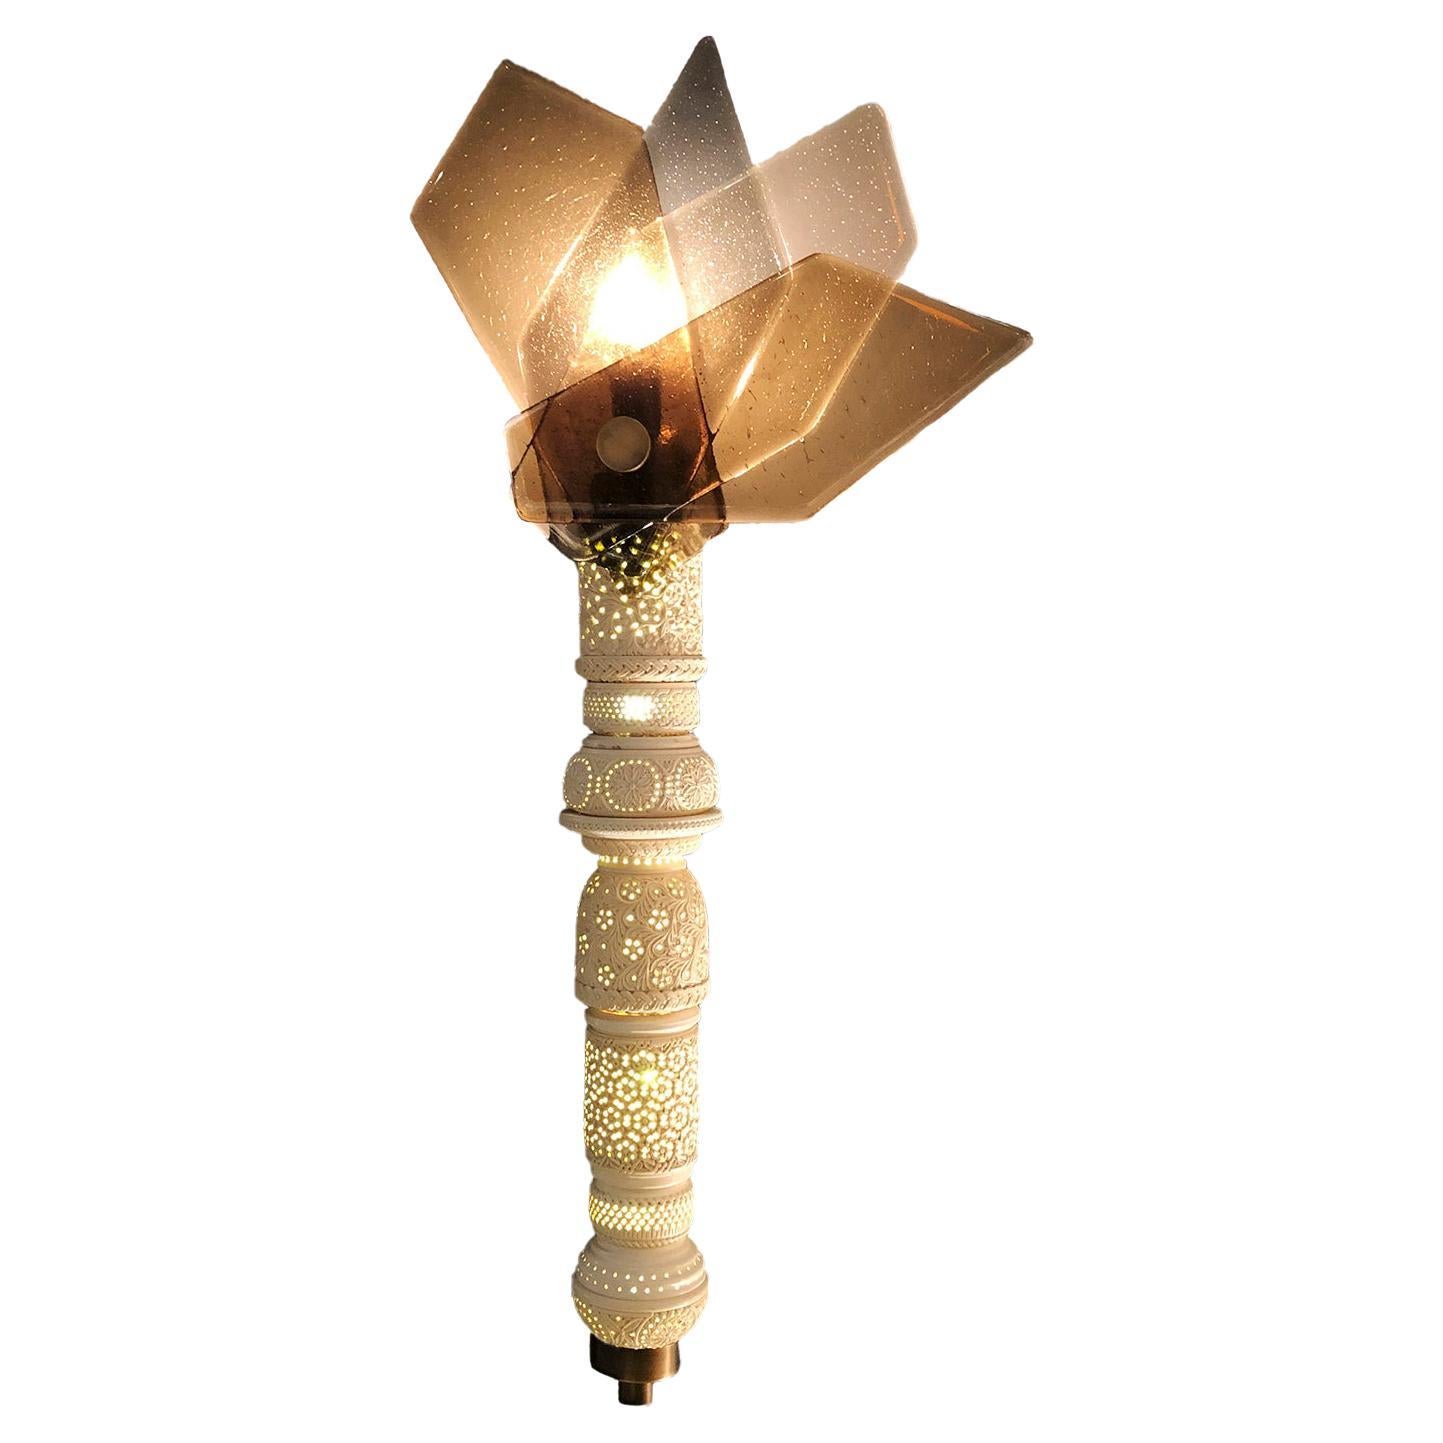 Lace Fan in Meerschaum, Glass, and Brass by Feyza